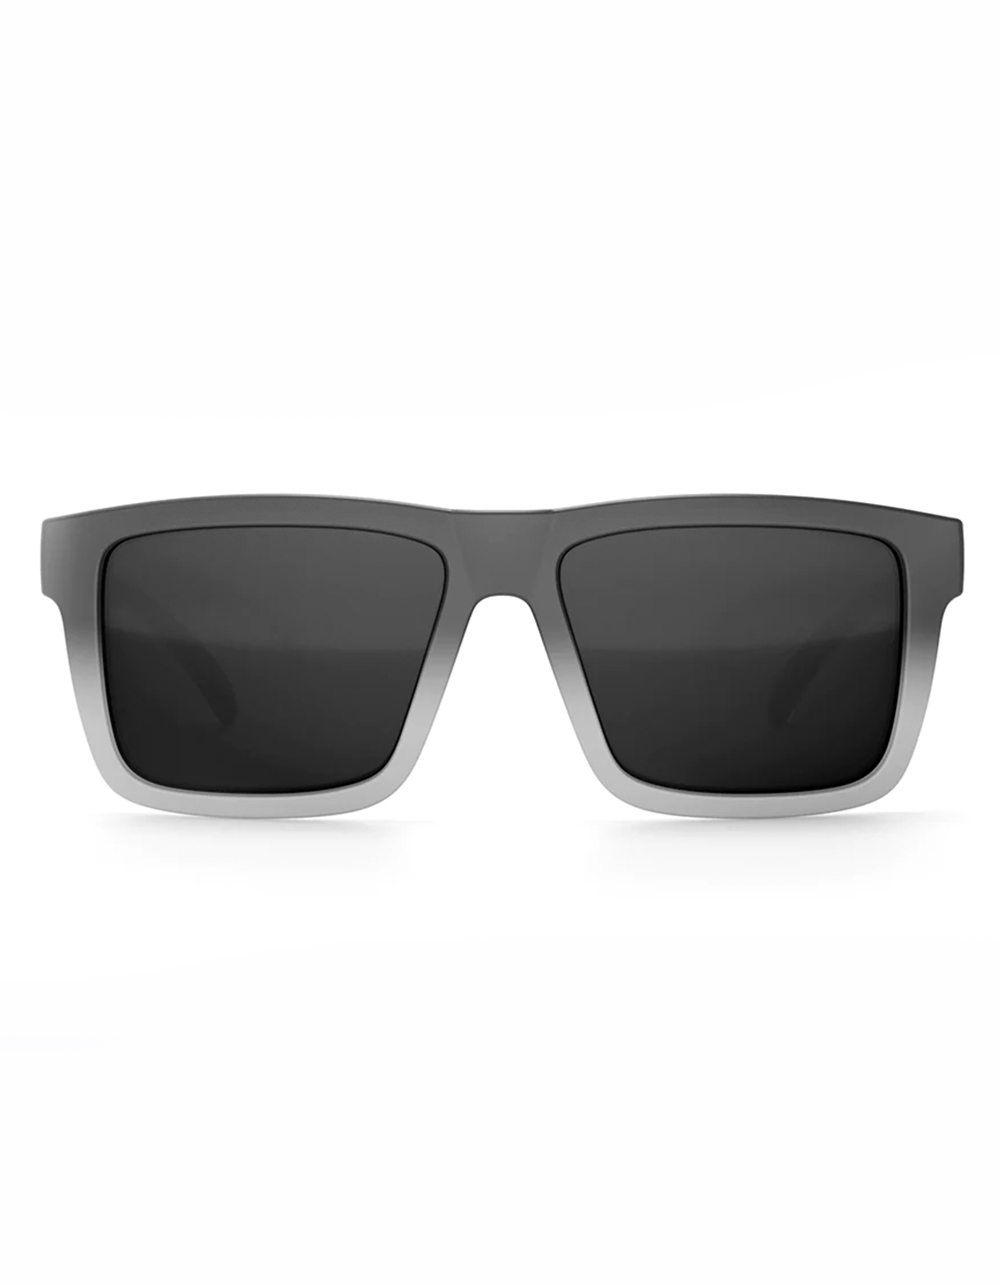 Heat Wave Visual XL Vise Z87 Hydroshock Polarized Sunglasses - Grey - One Size